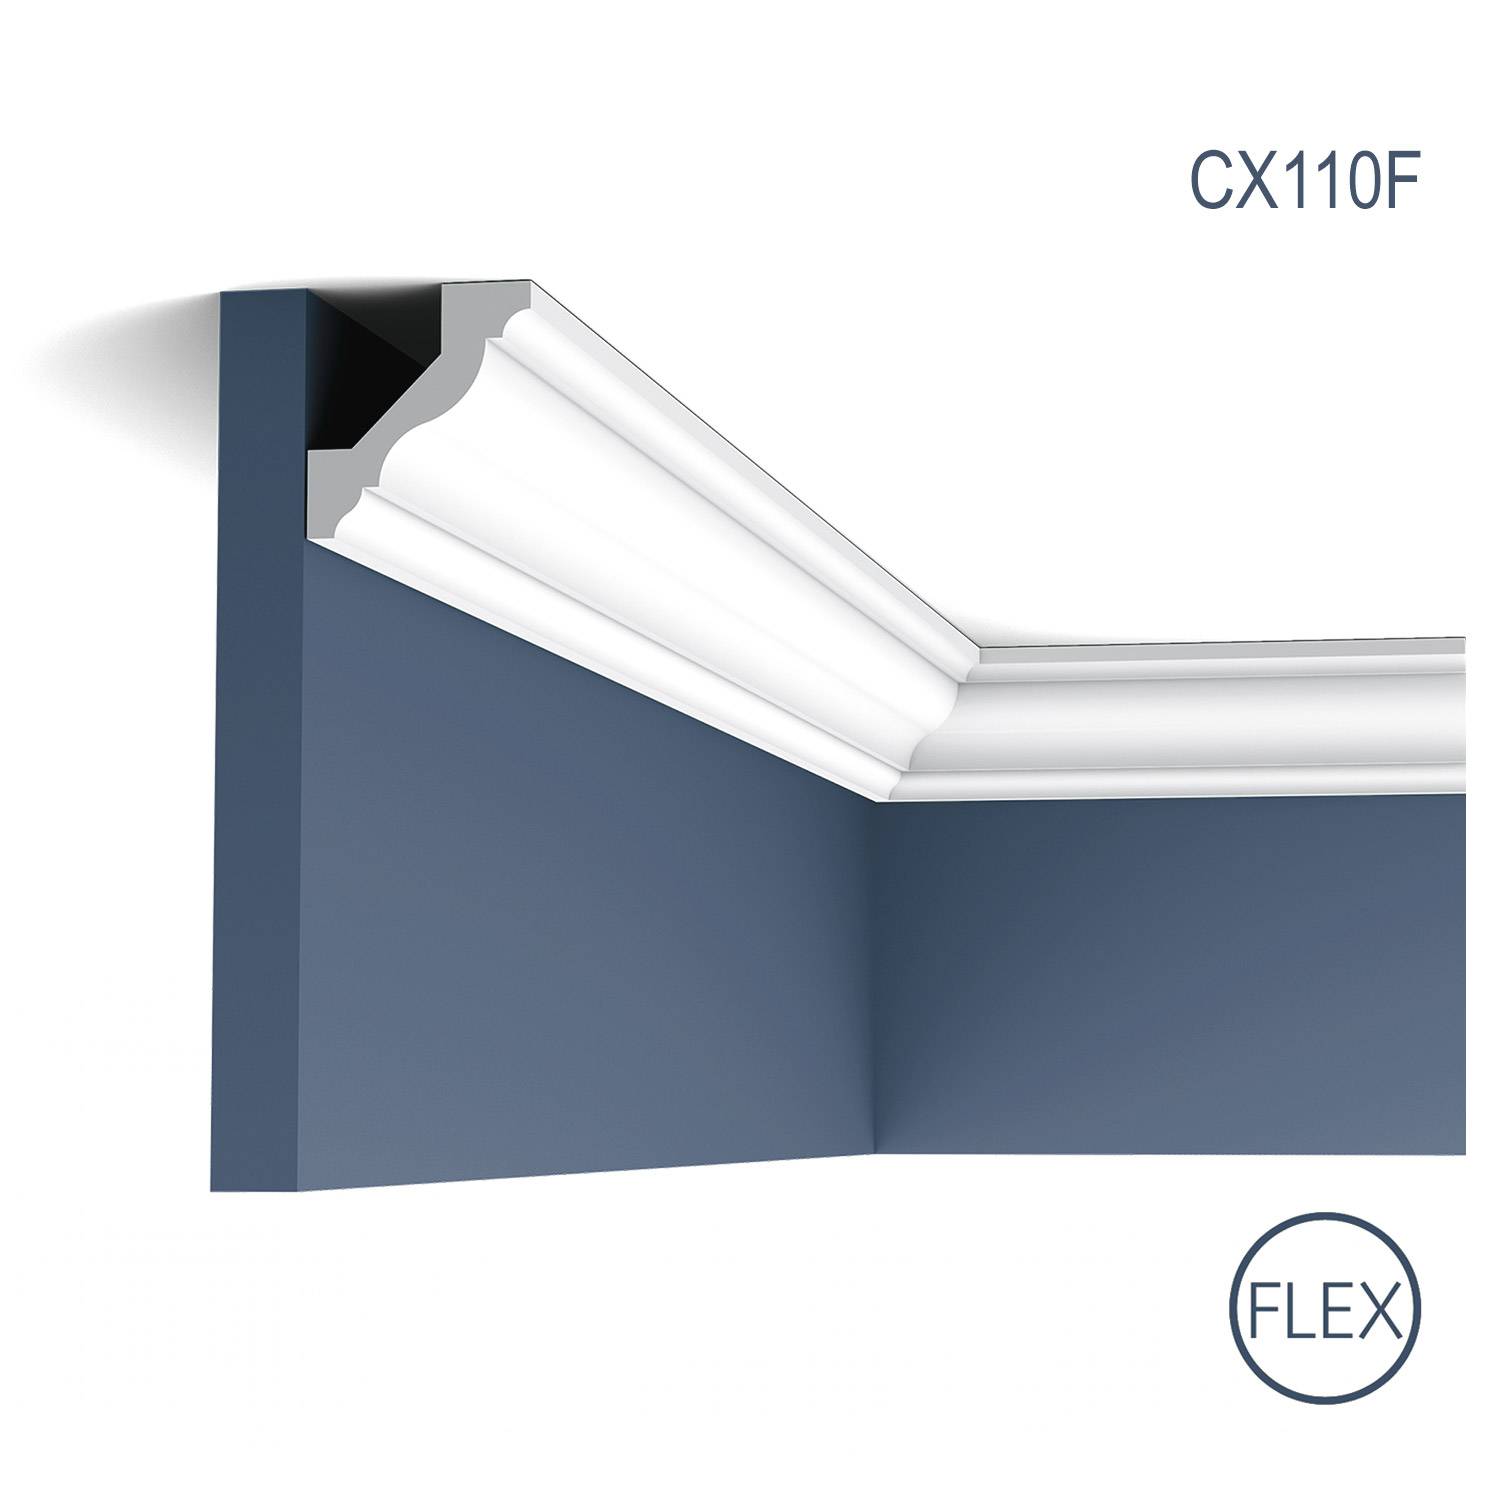 Cornisa Flex Axxent CX110F, Dimensiuni: 200 X 4.5 X 4.1 cm, Orac Decor